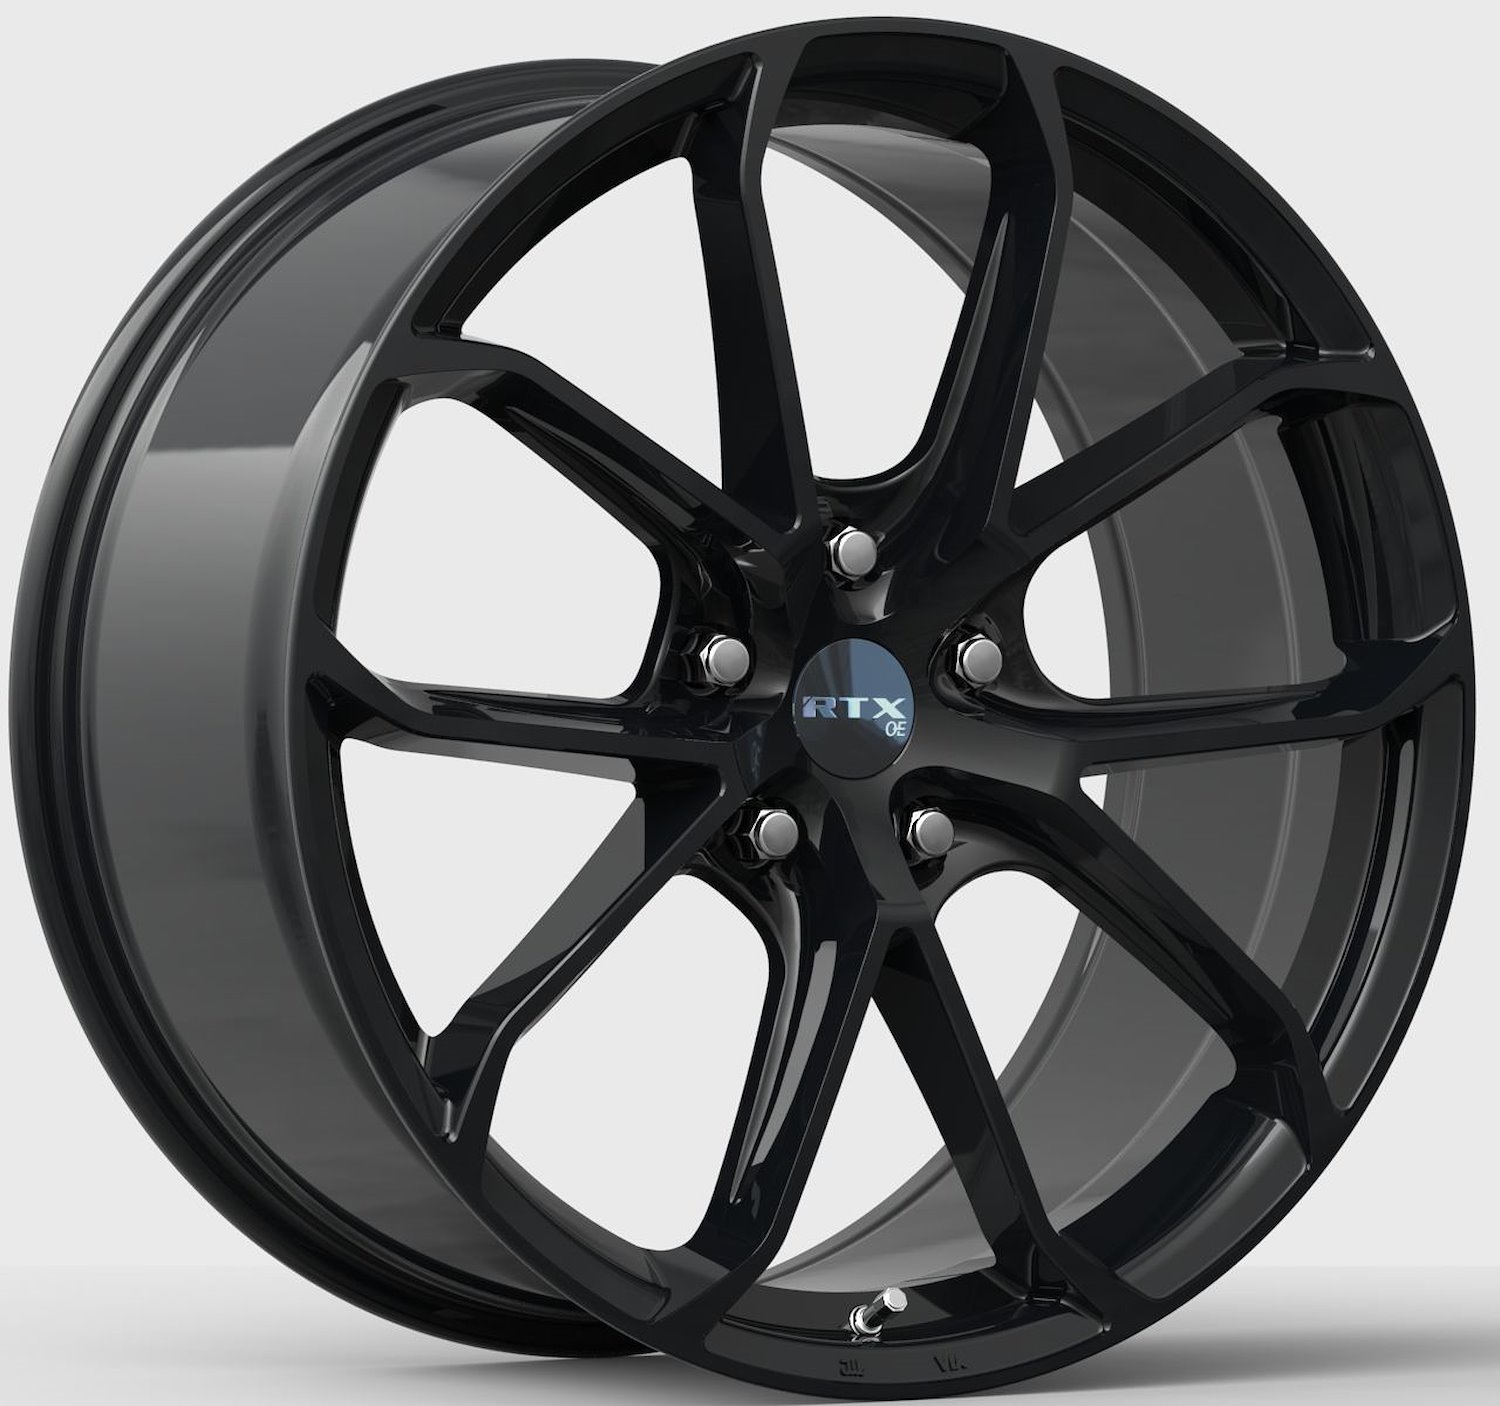 083233 OE-Series MC-01 Wheel [Size: 21" x 9.50"] Gloss Black Finish